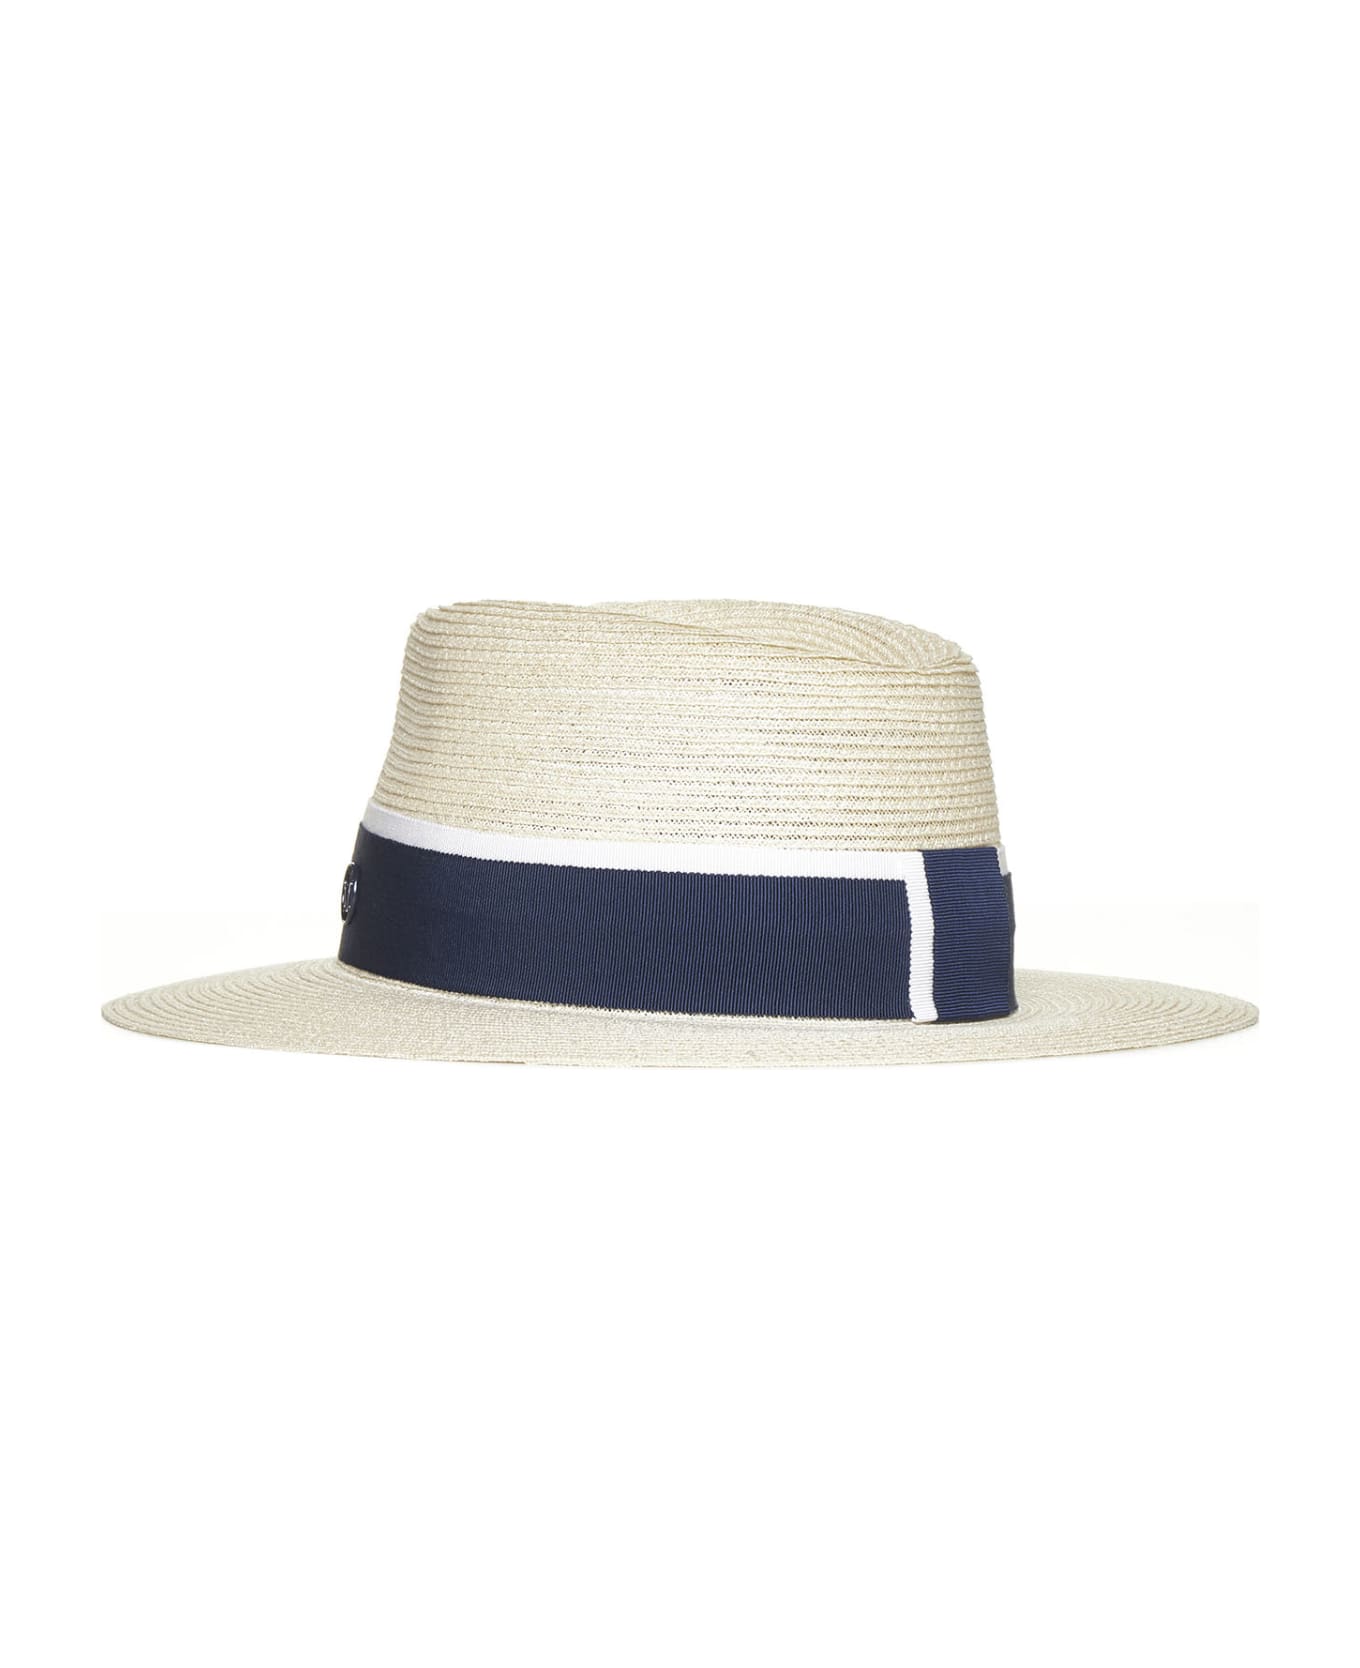 Maison Michel Hat - Natural navy 帽子